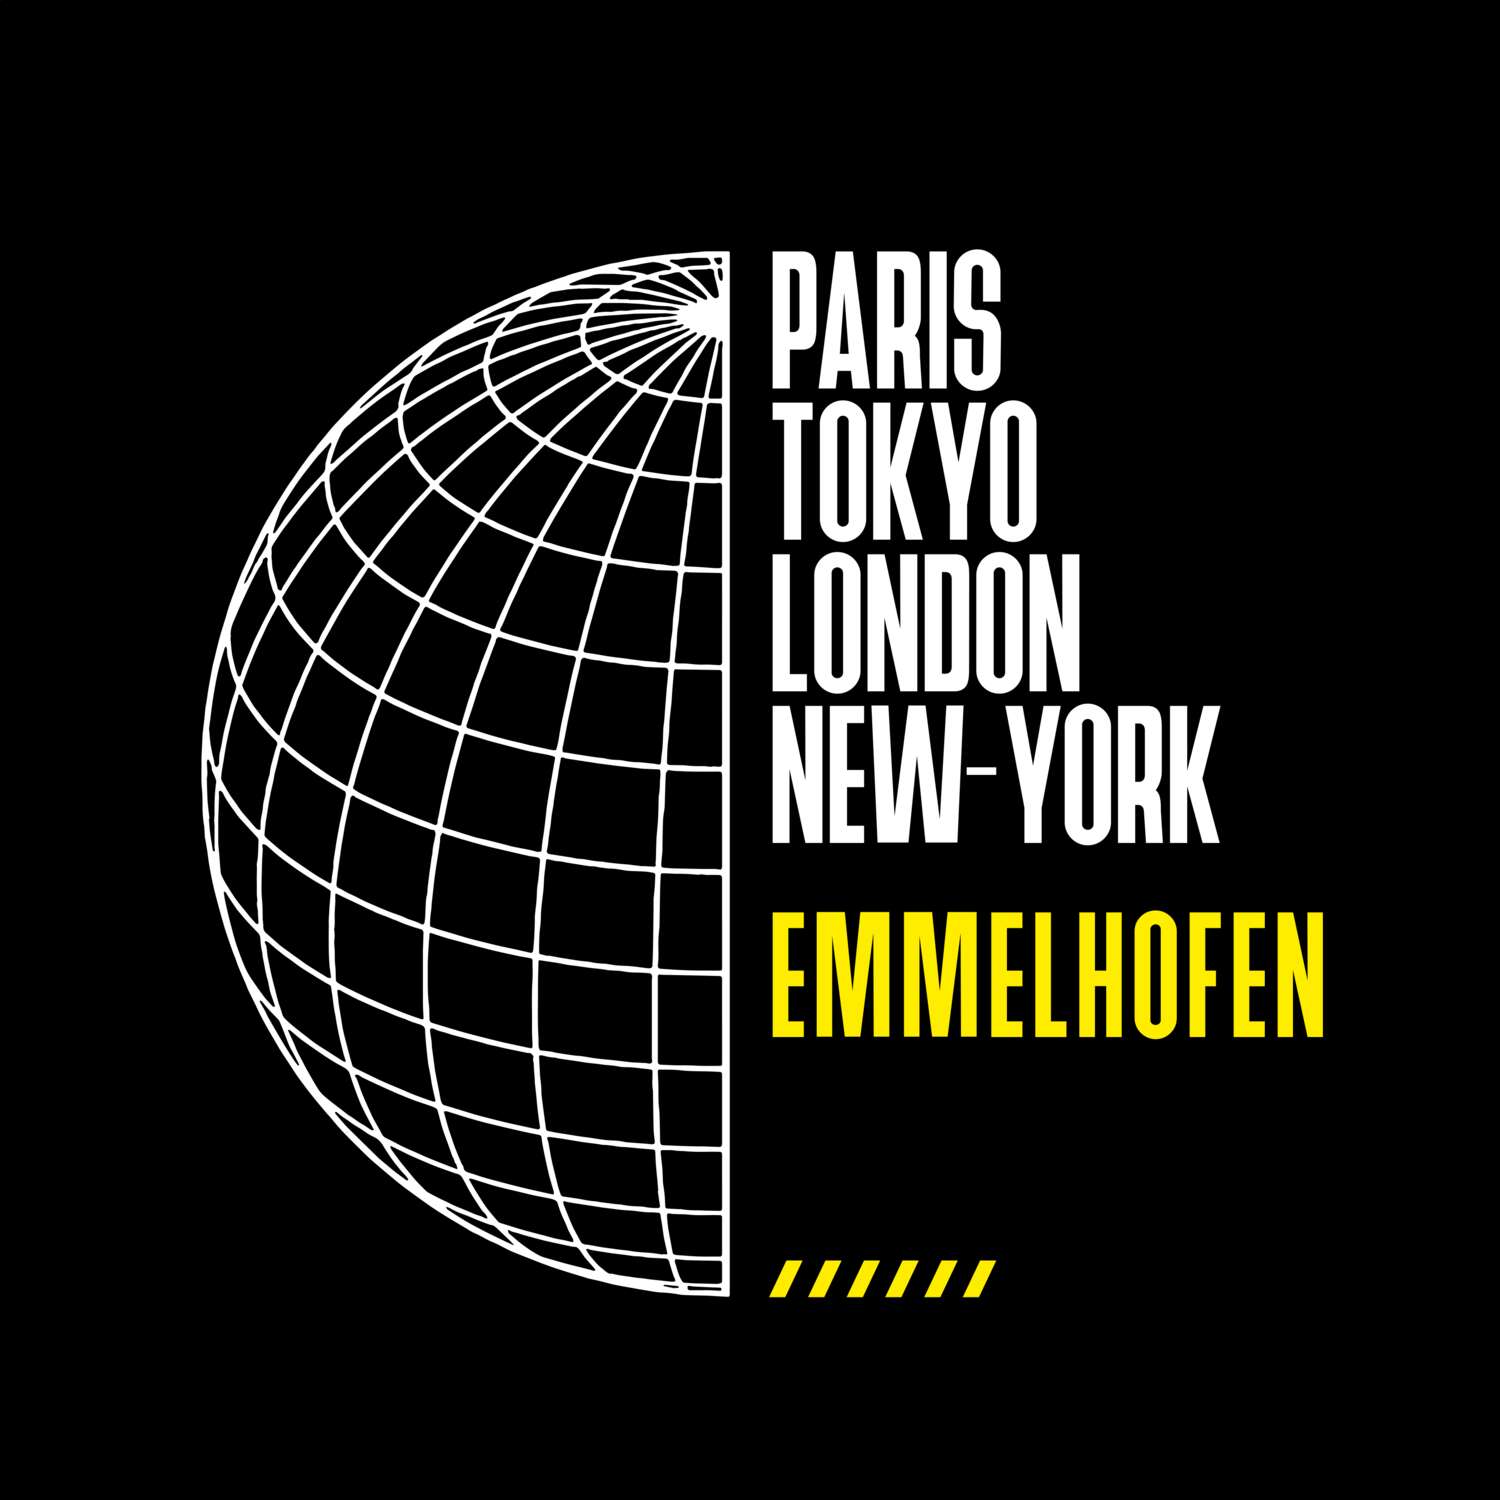 Emmelhofen T-Shirt »Paris Tokyo London«